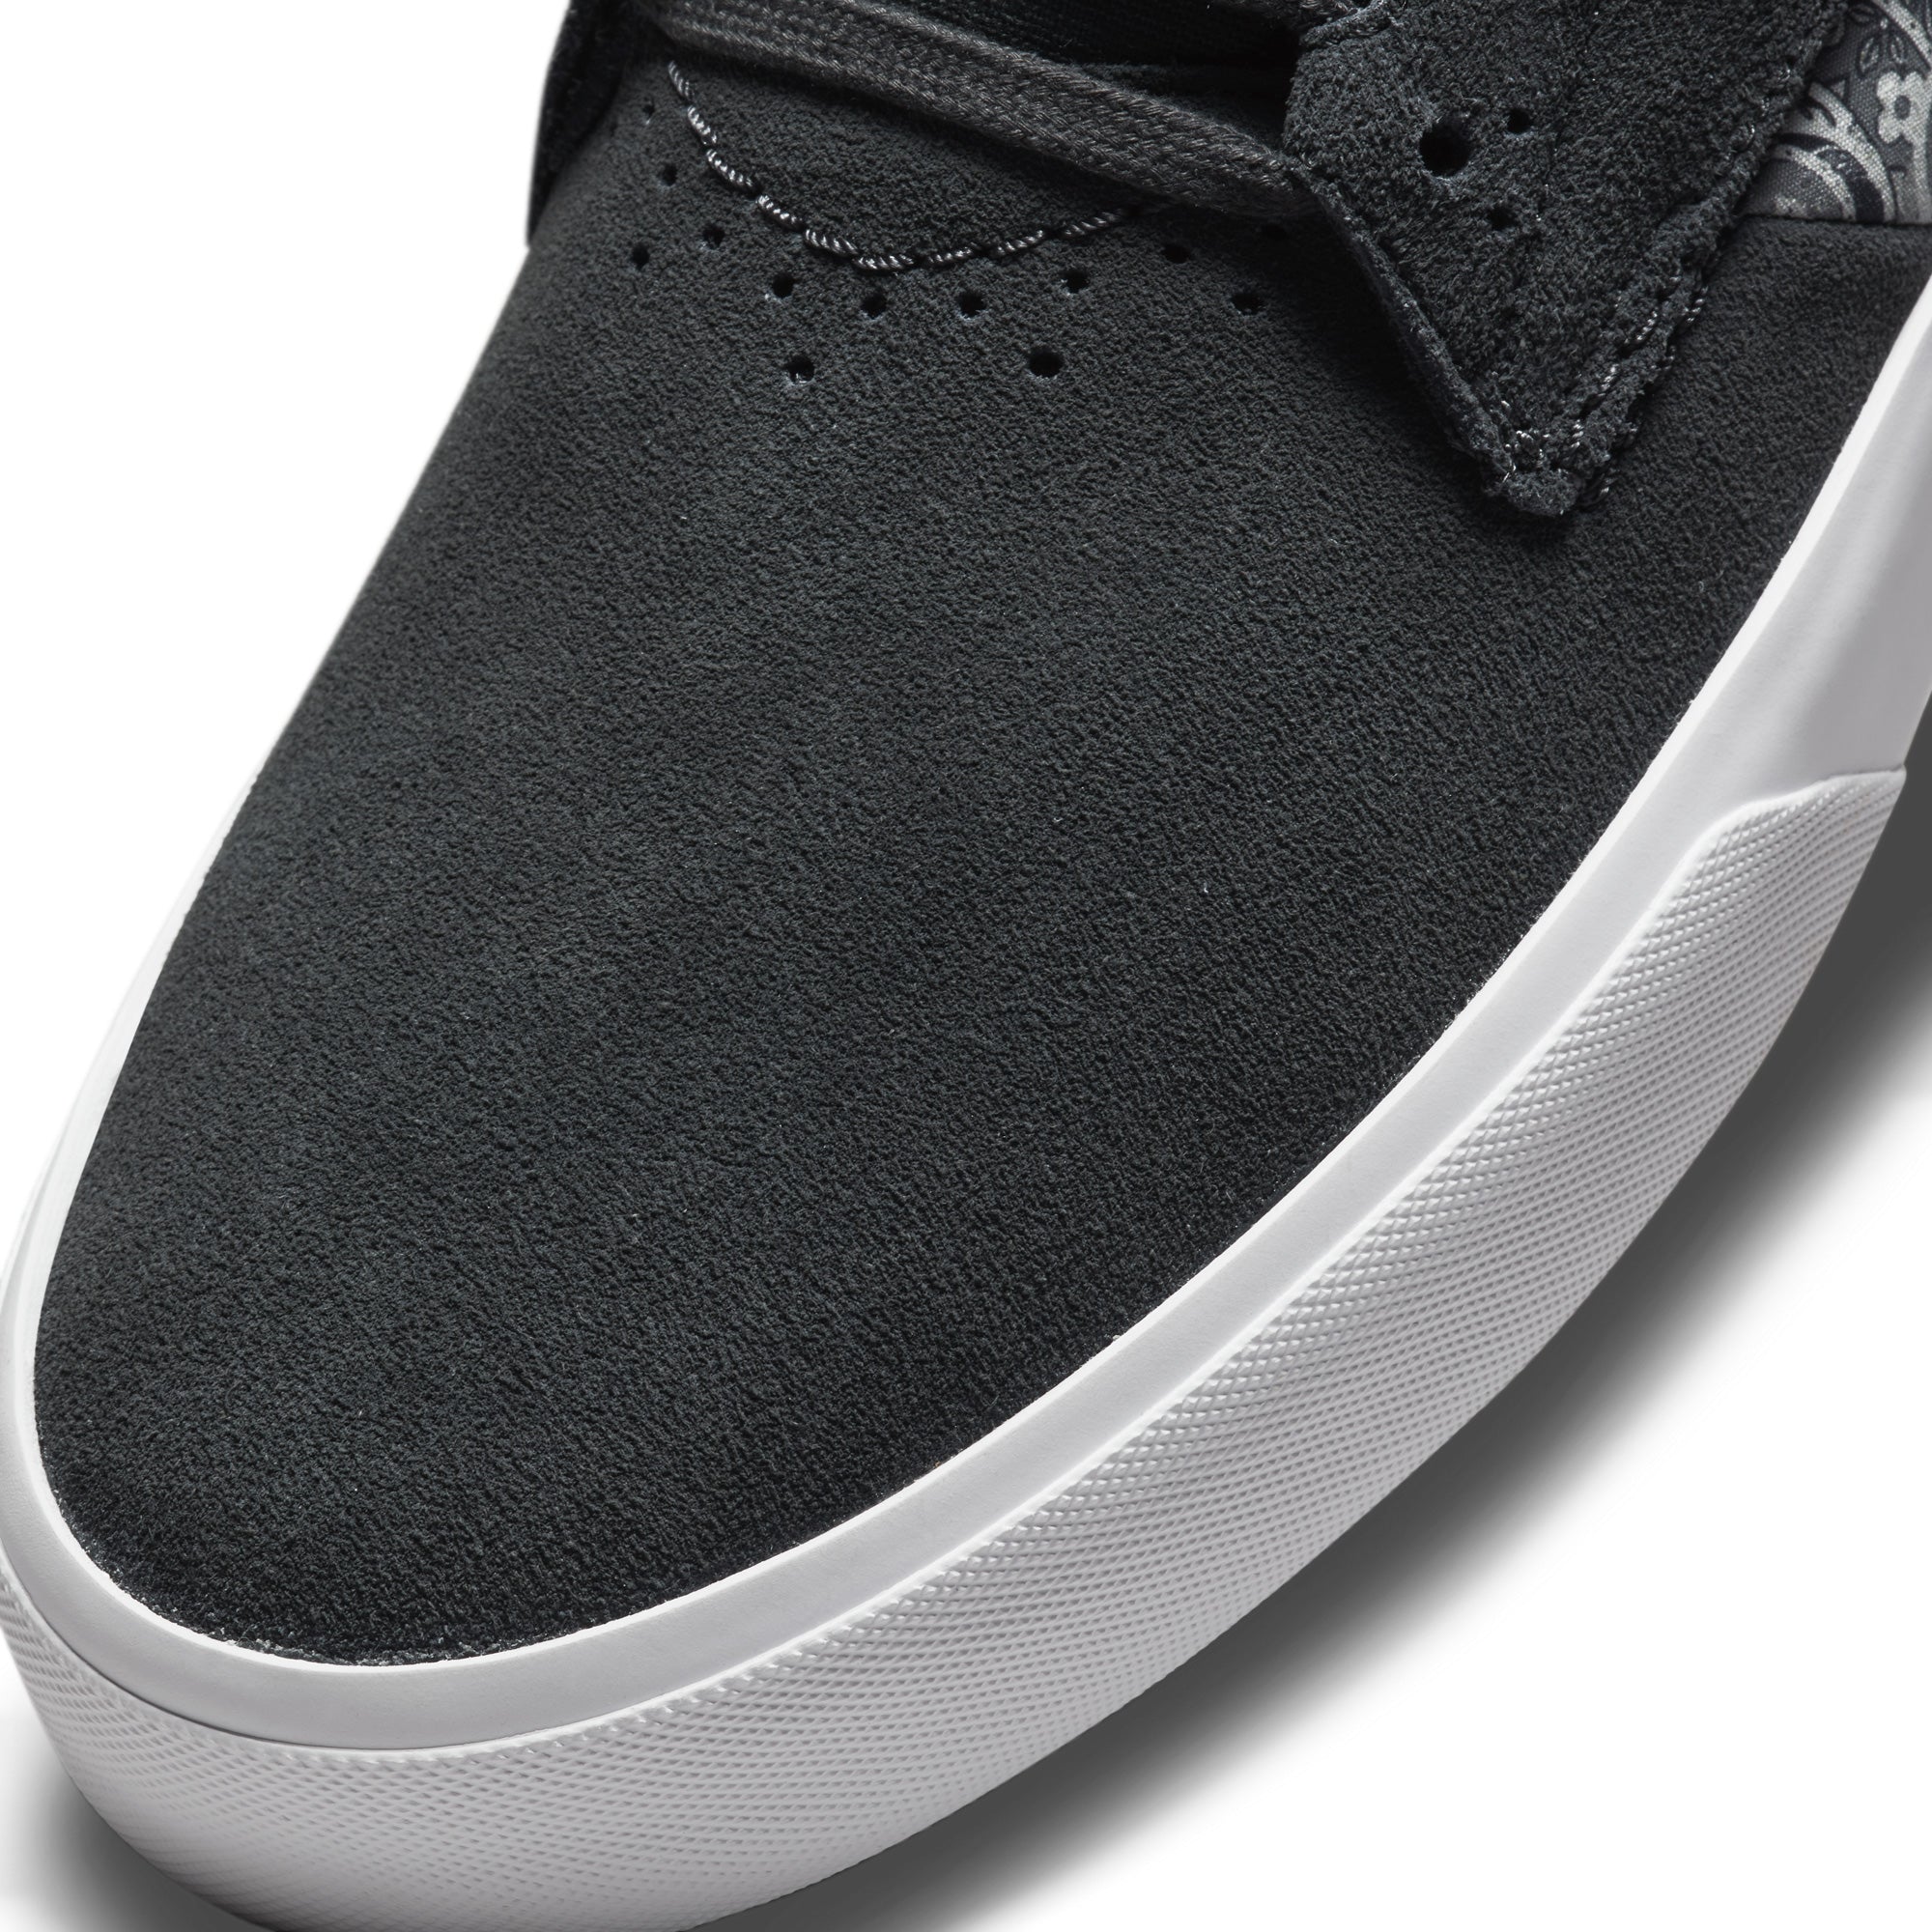 Nike SB Shane Premium Shoe - Dark Smoke Grey/Paisley